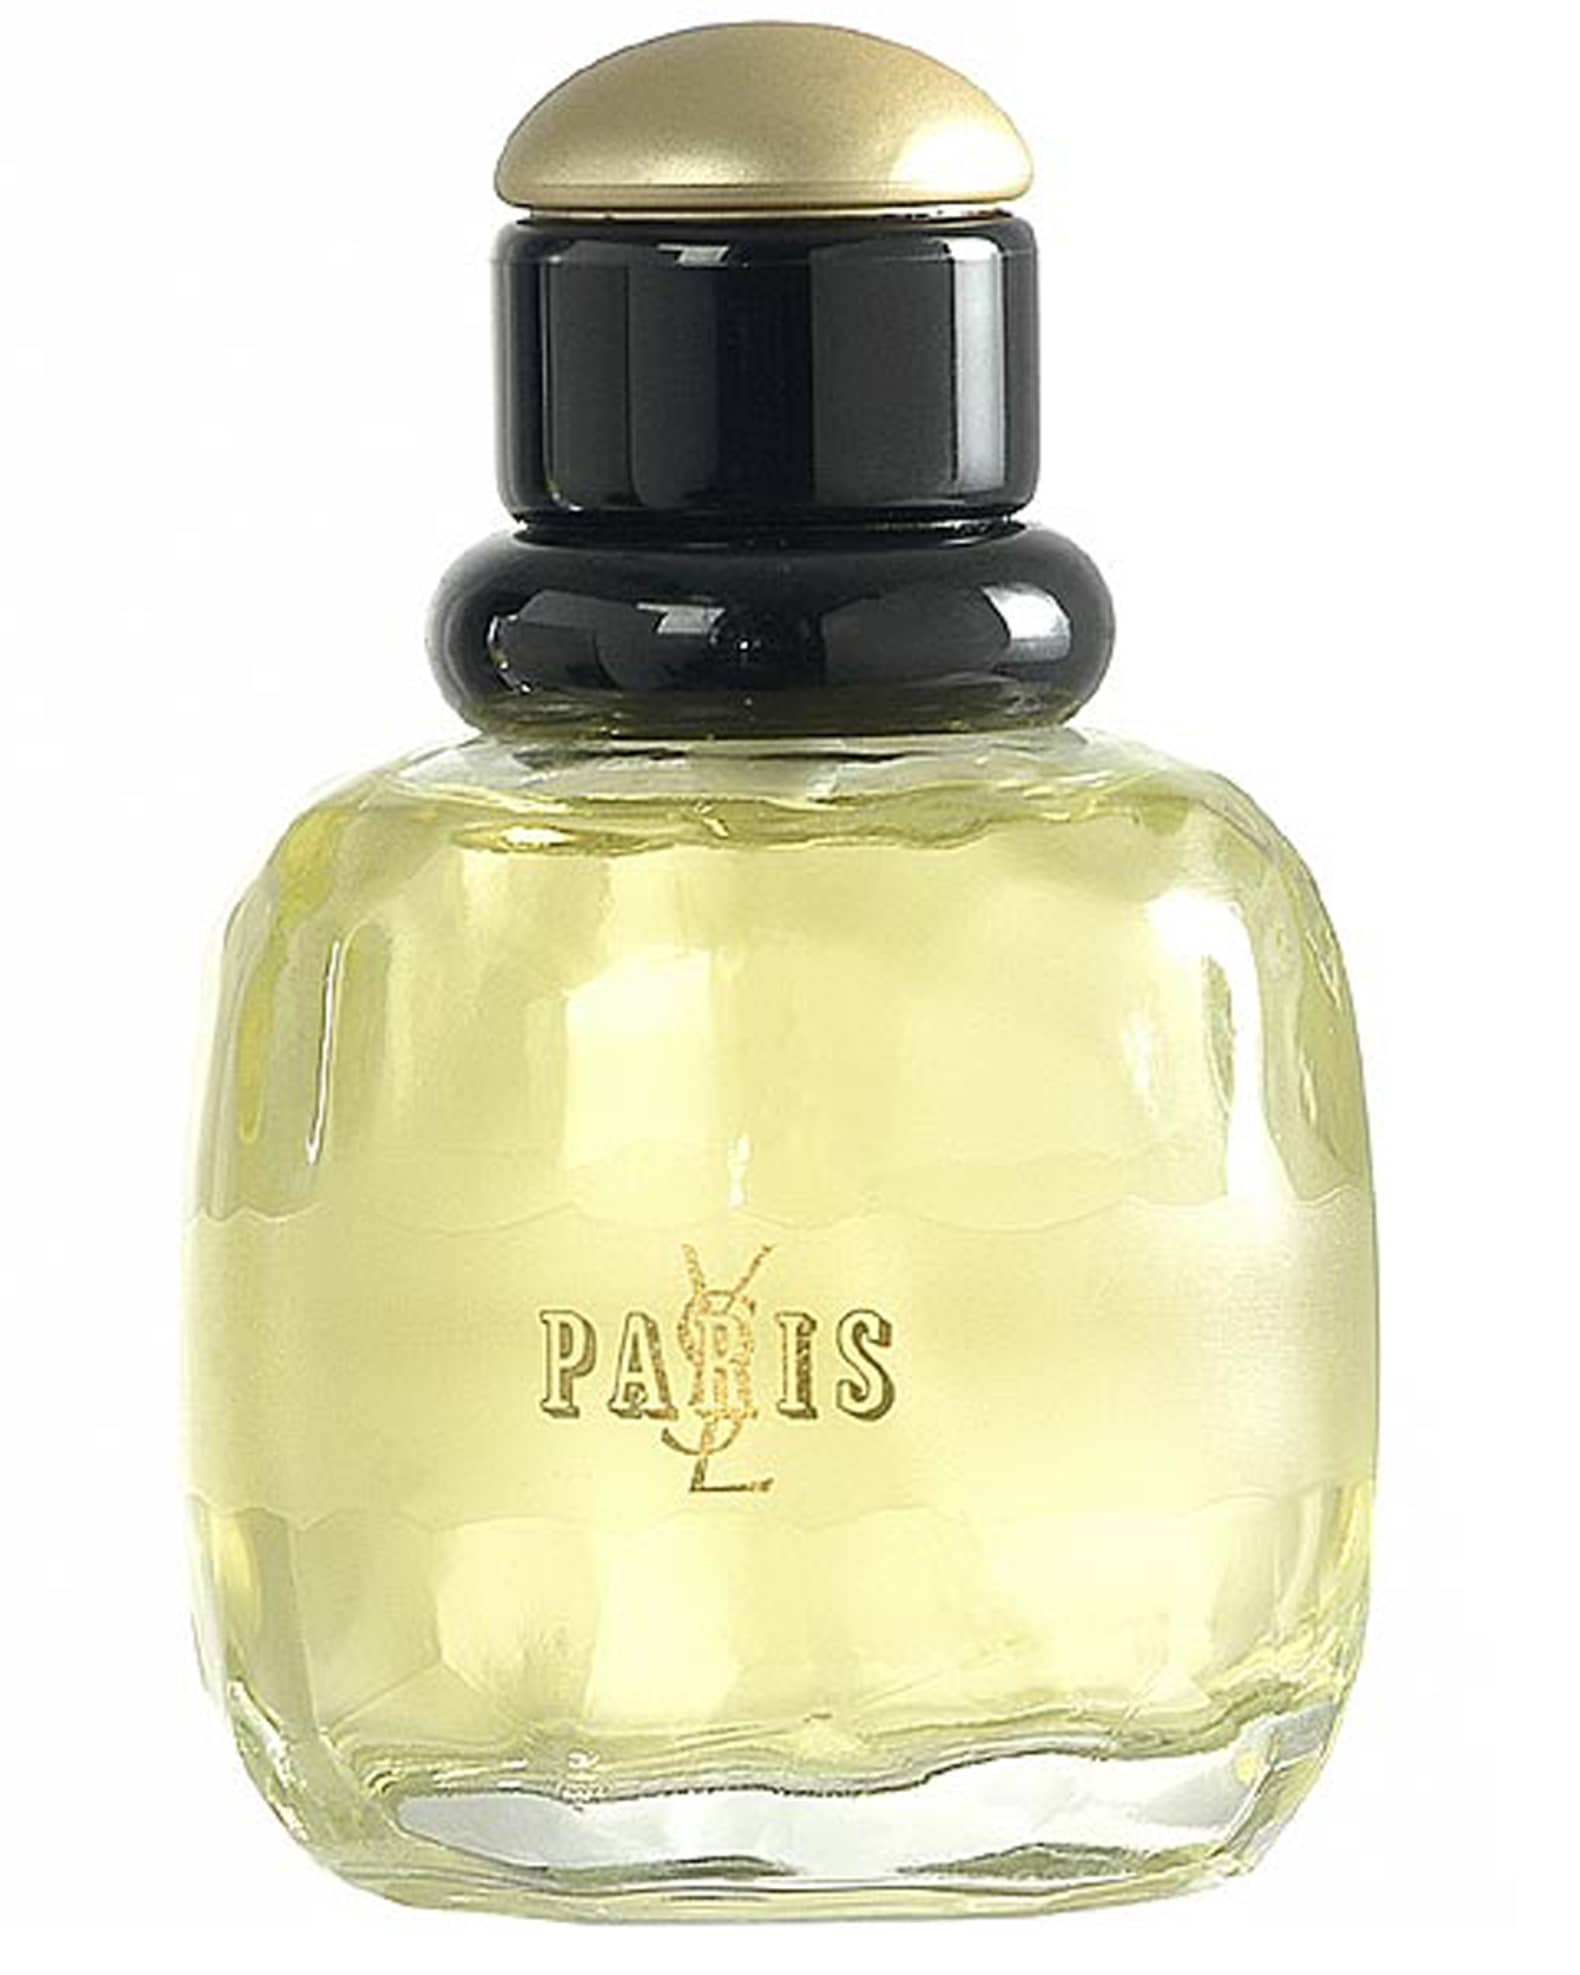 YSL Paris perfume.